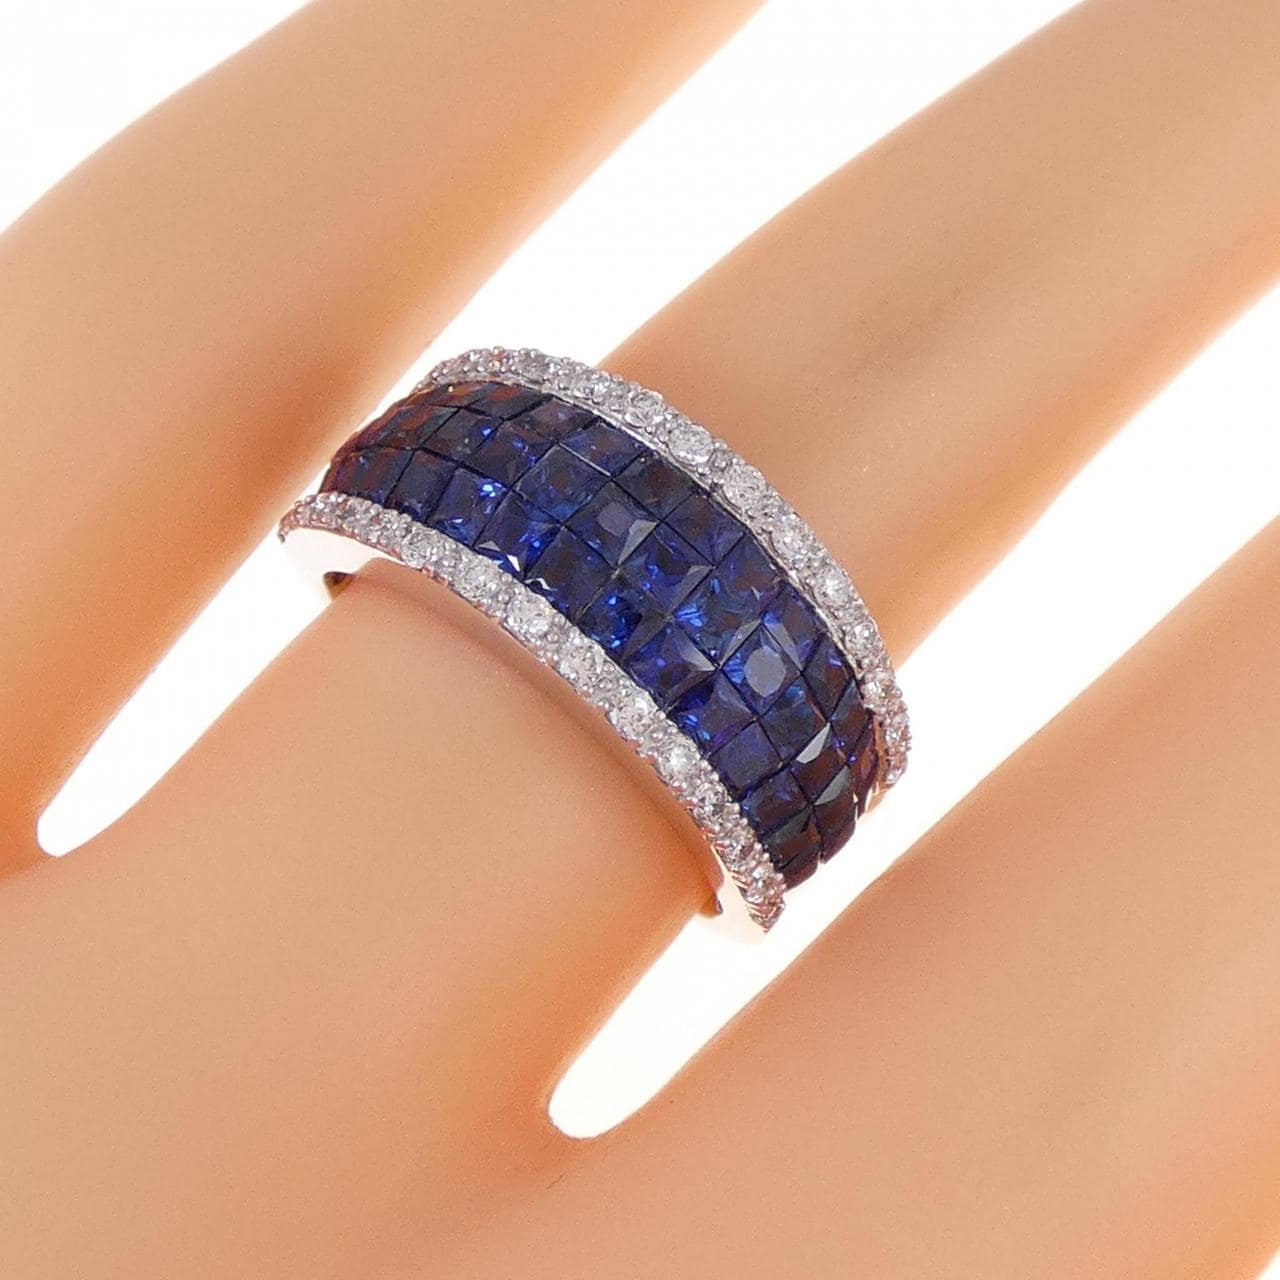 K18WG sapphire ring